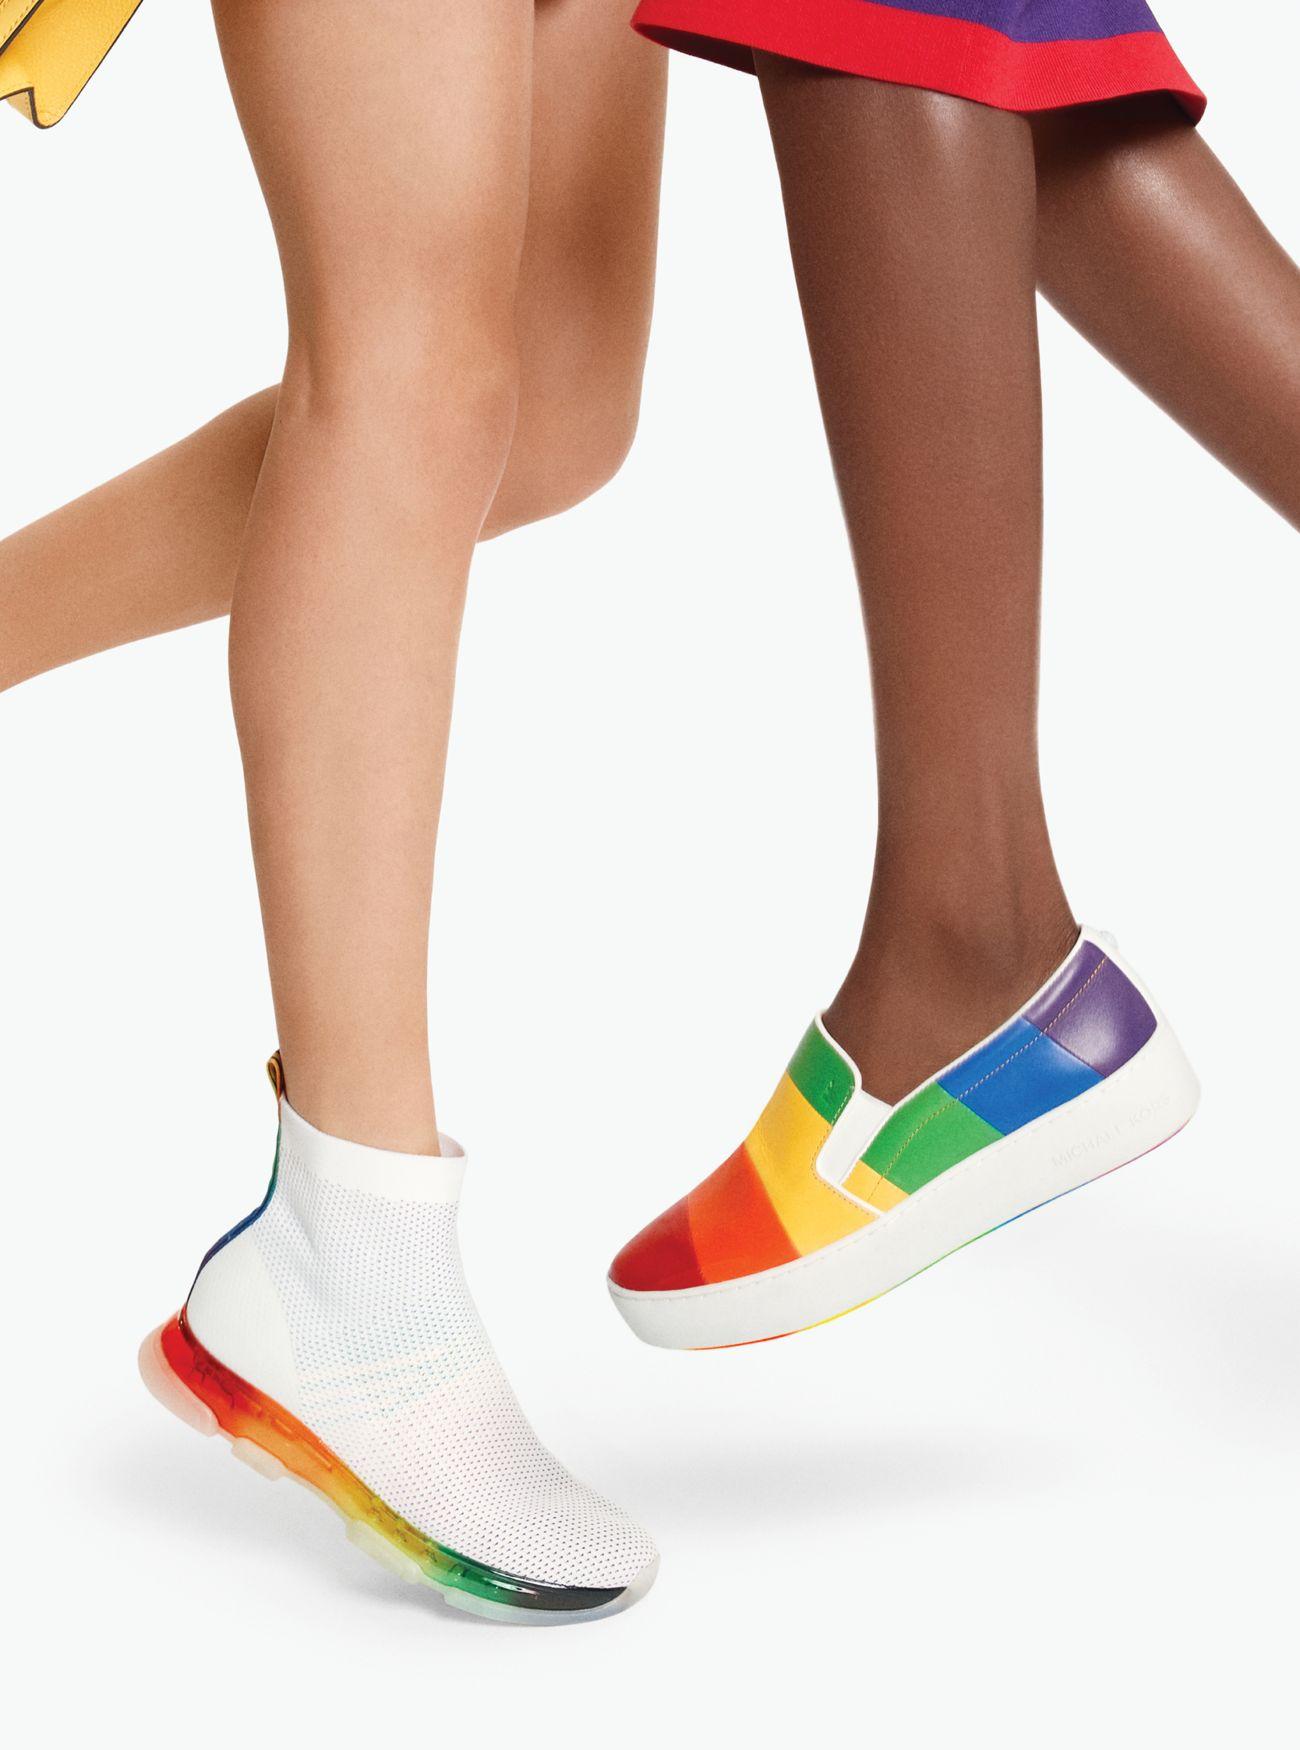 michael kors shoes rainbow